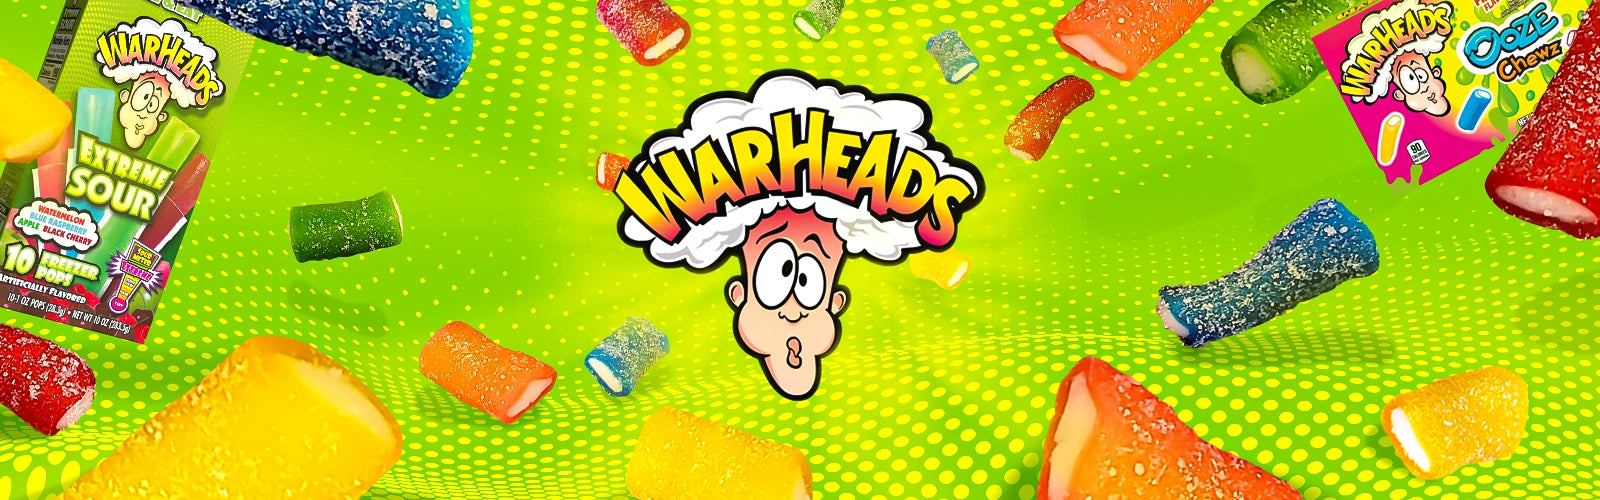 Warheads Candy Banner 